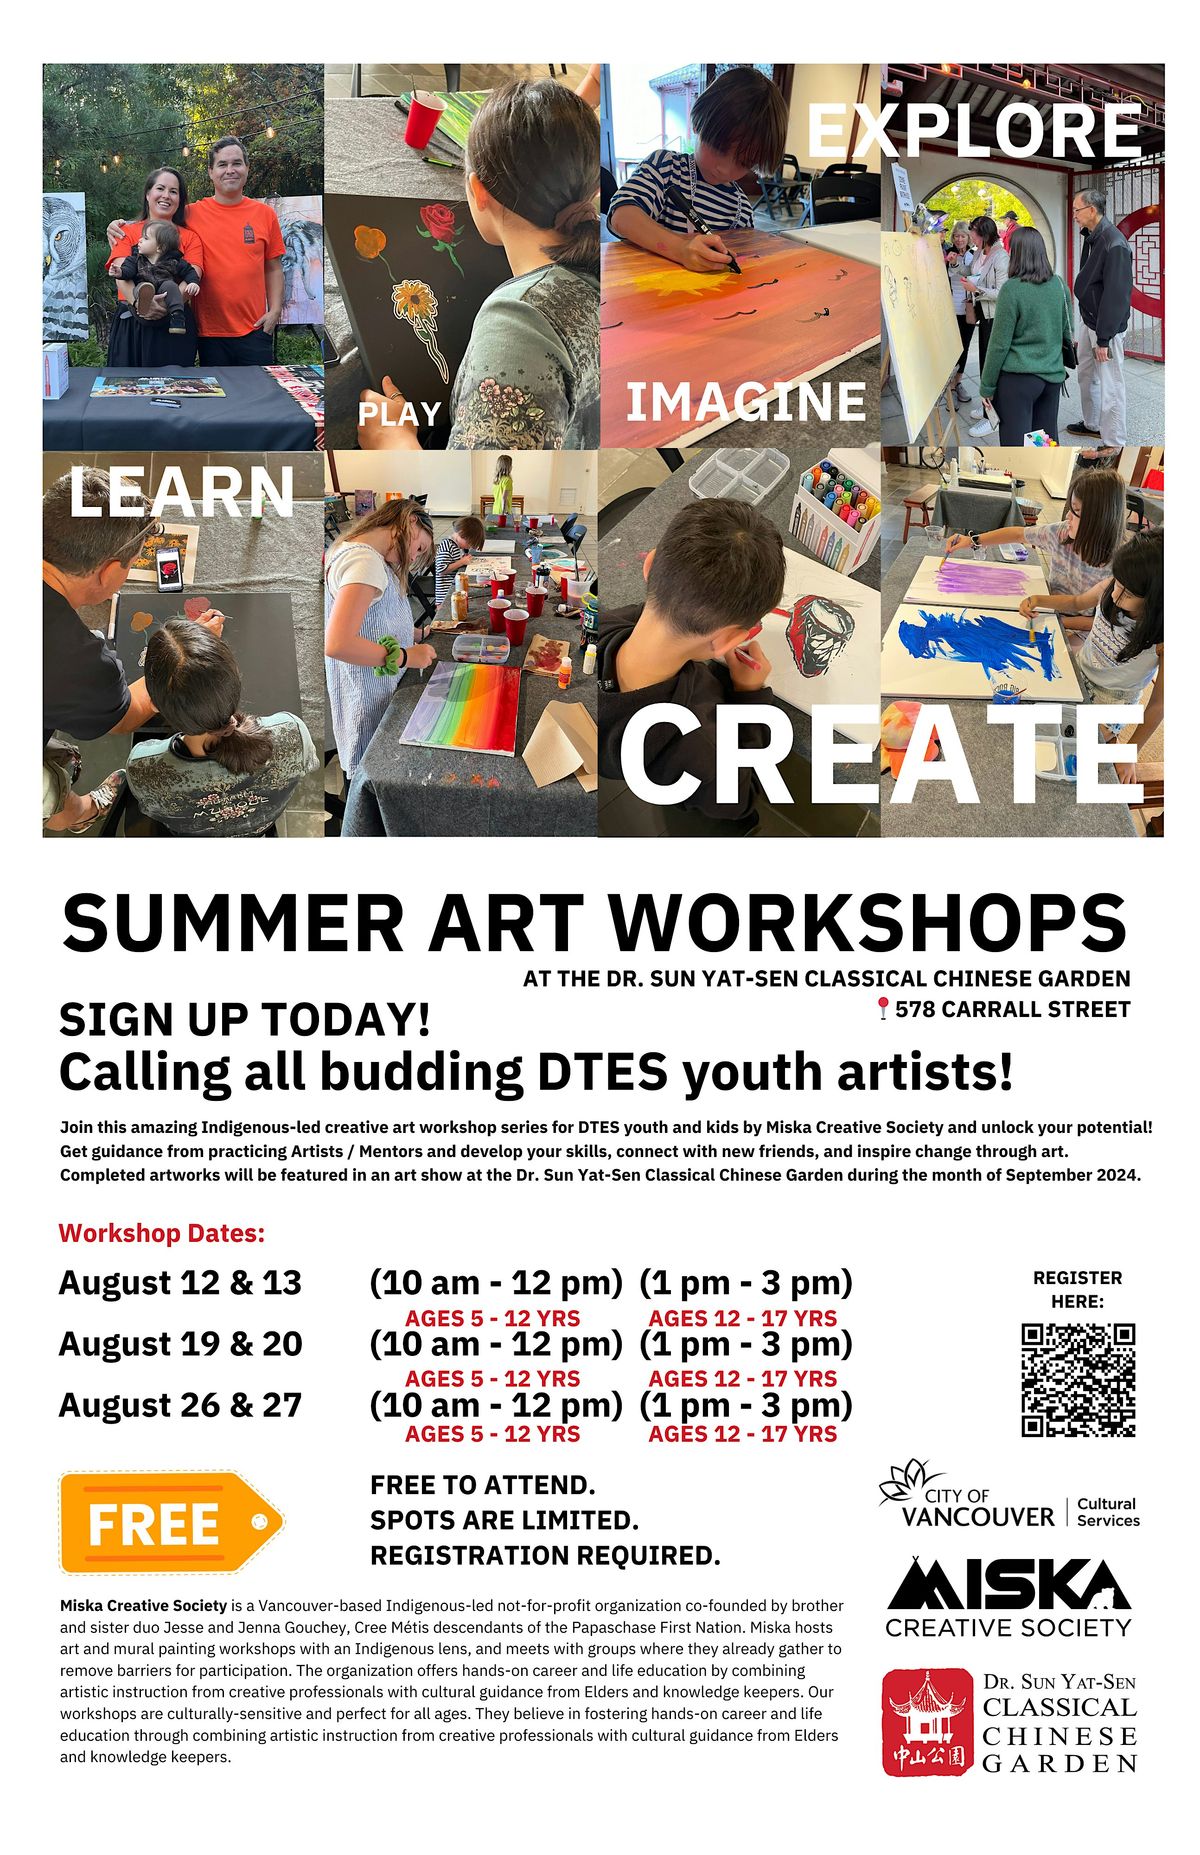 Summer Art Workshops with Miska Creative Society